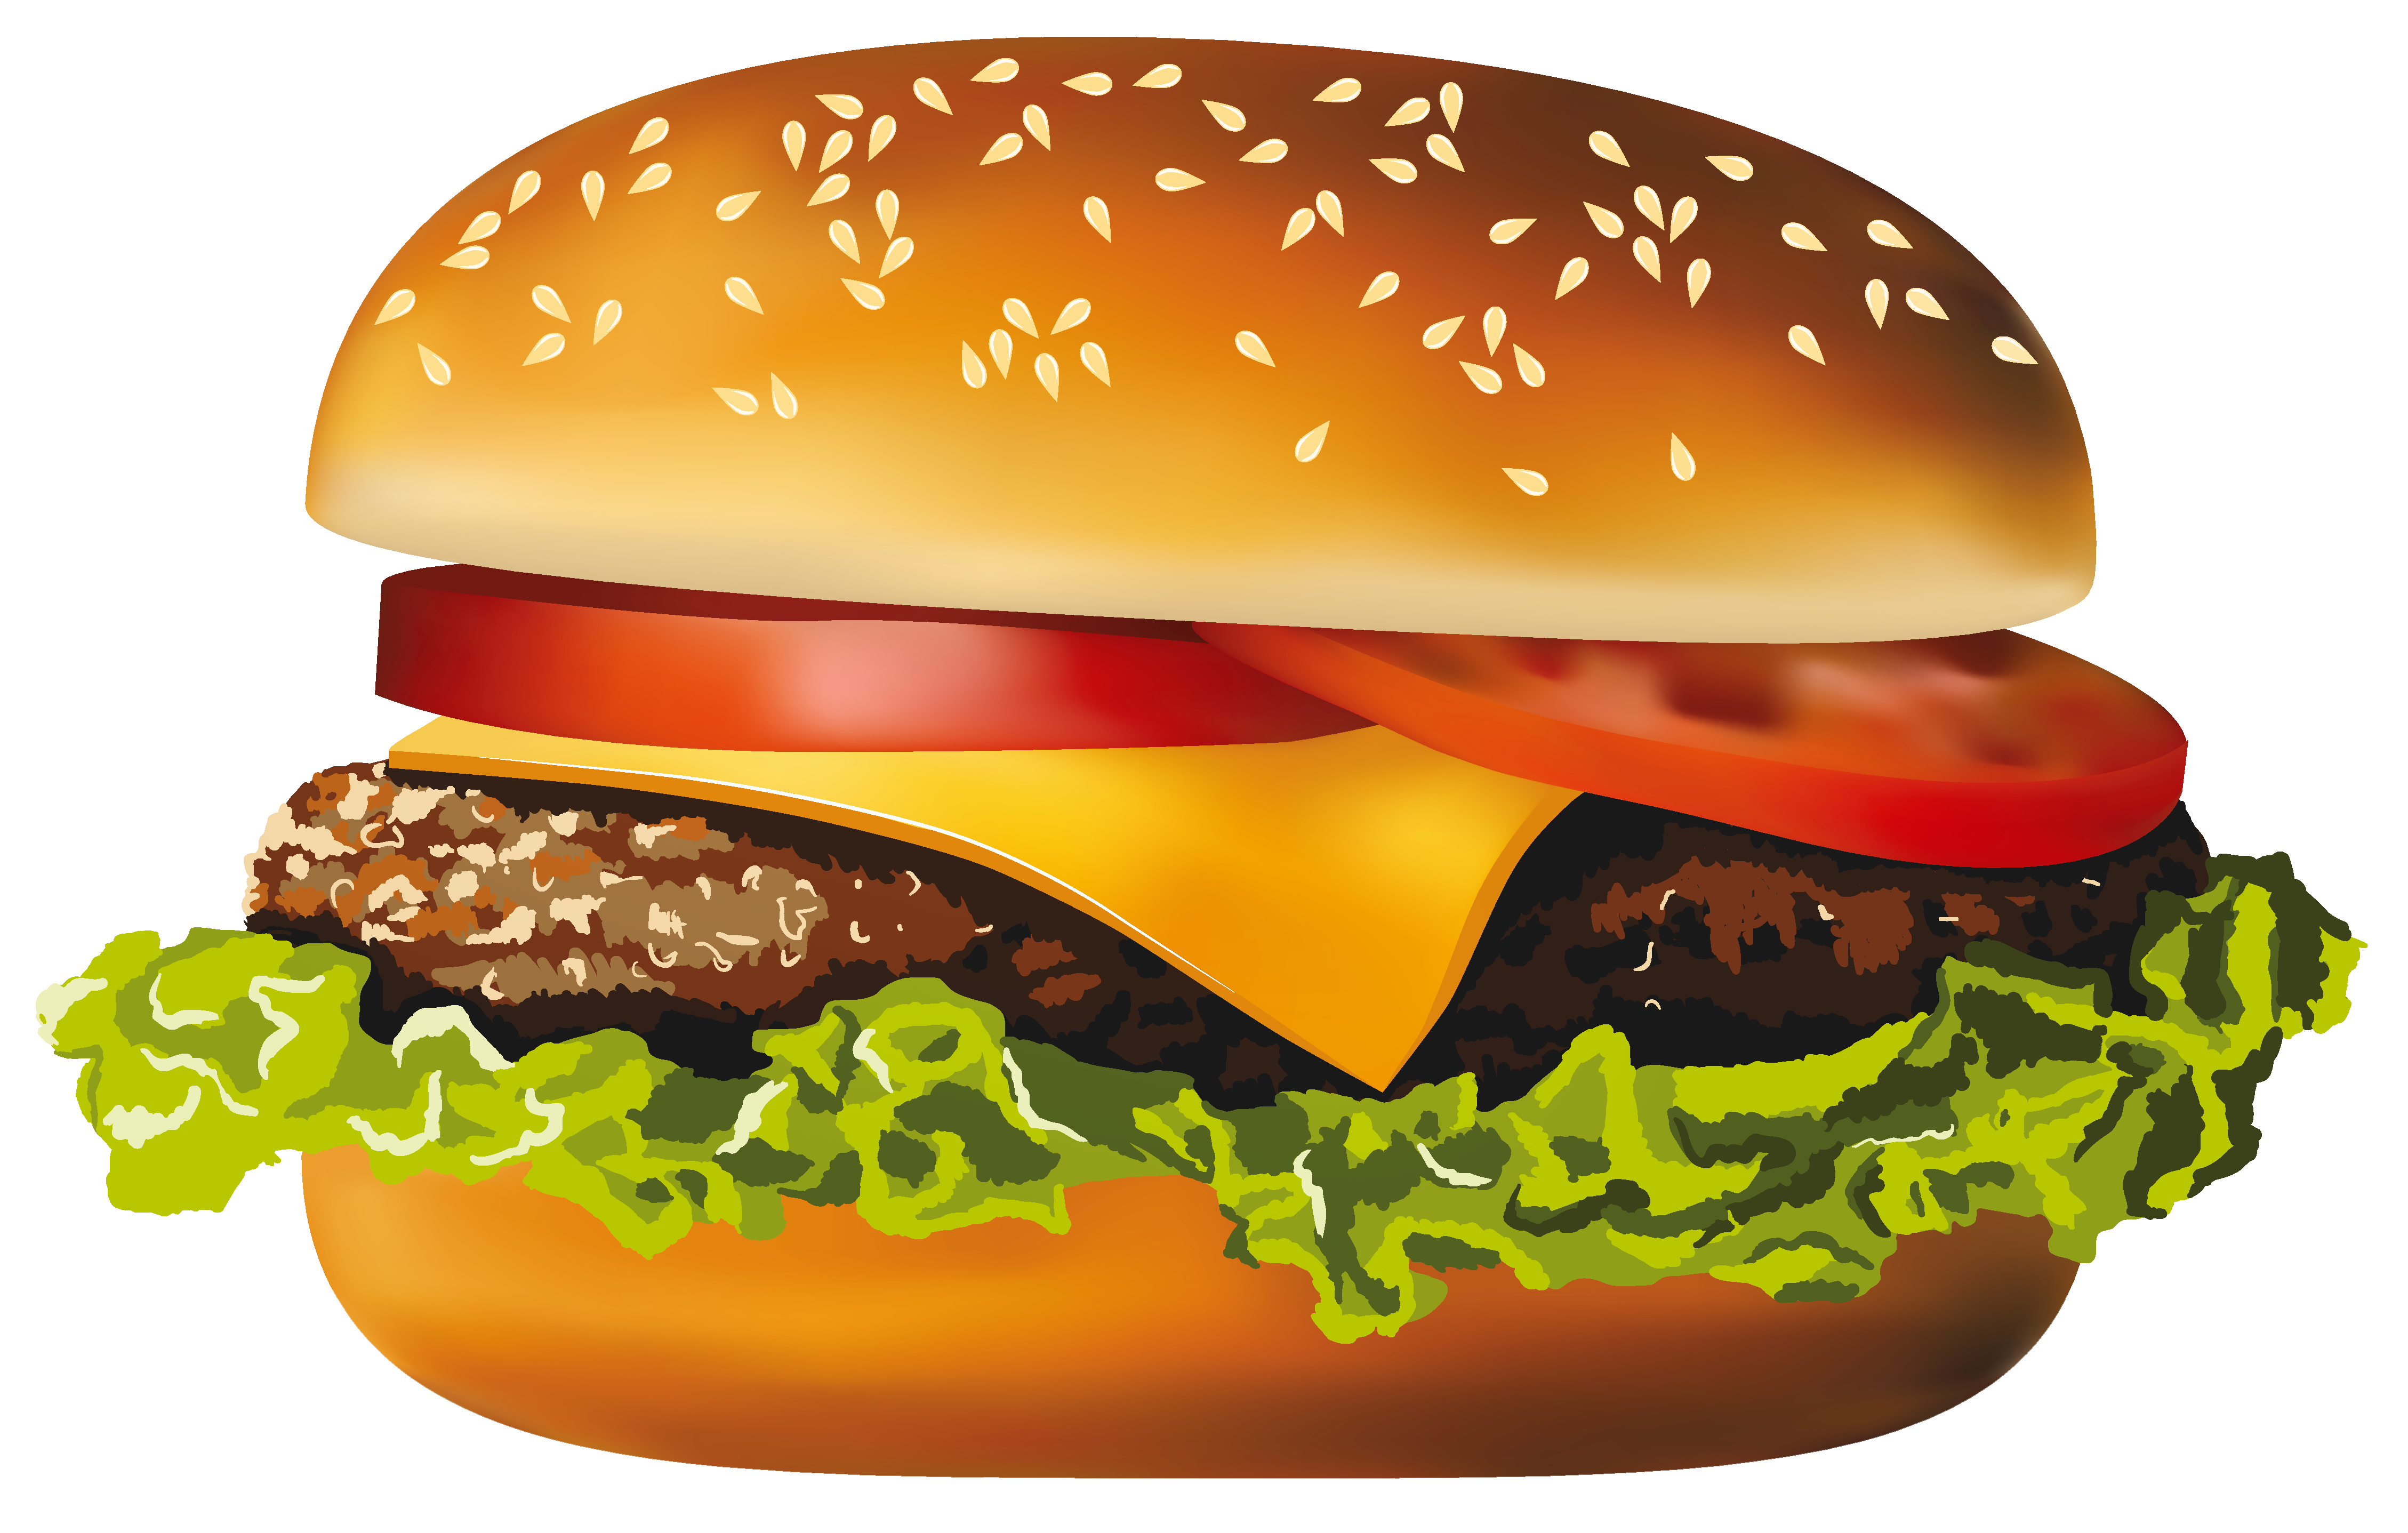 Clip Art. hamburger with the 